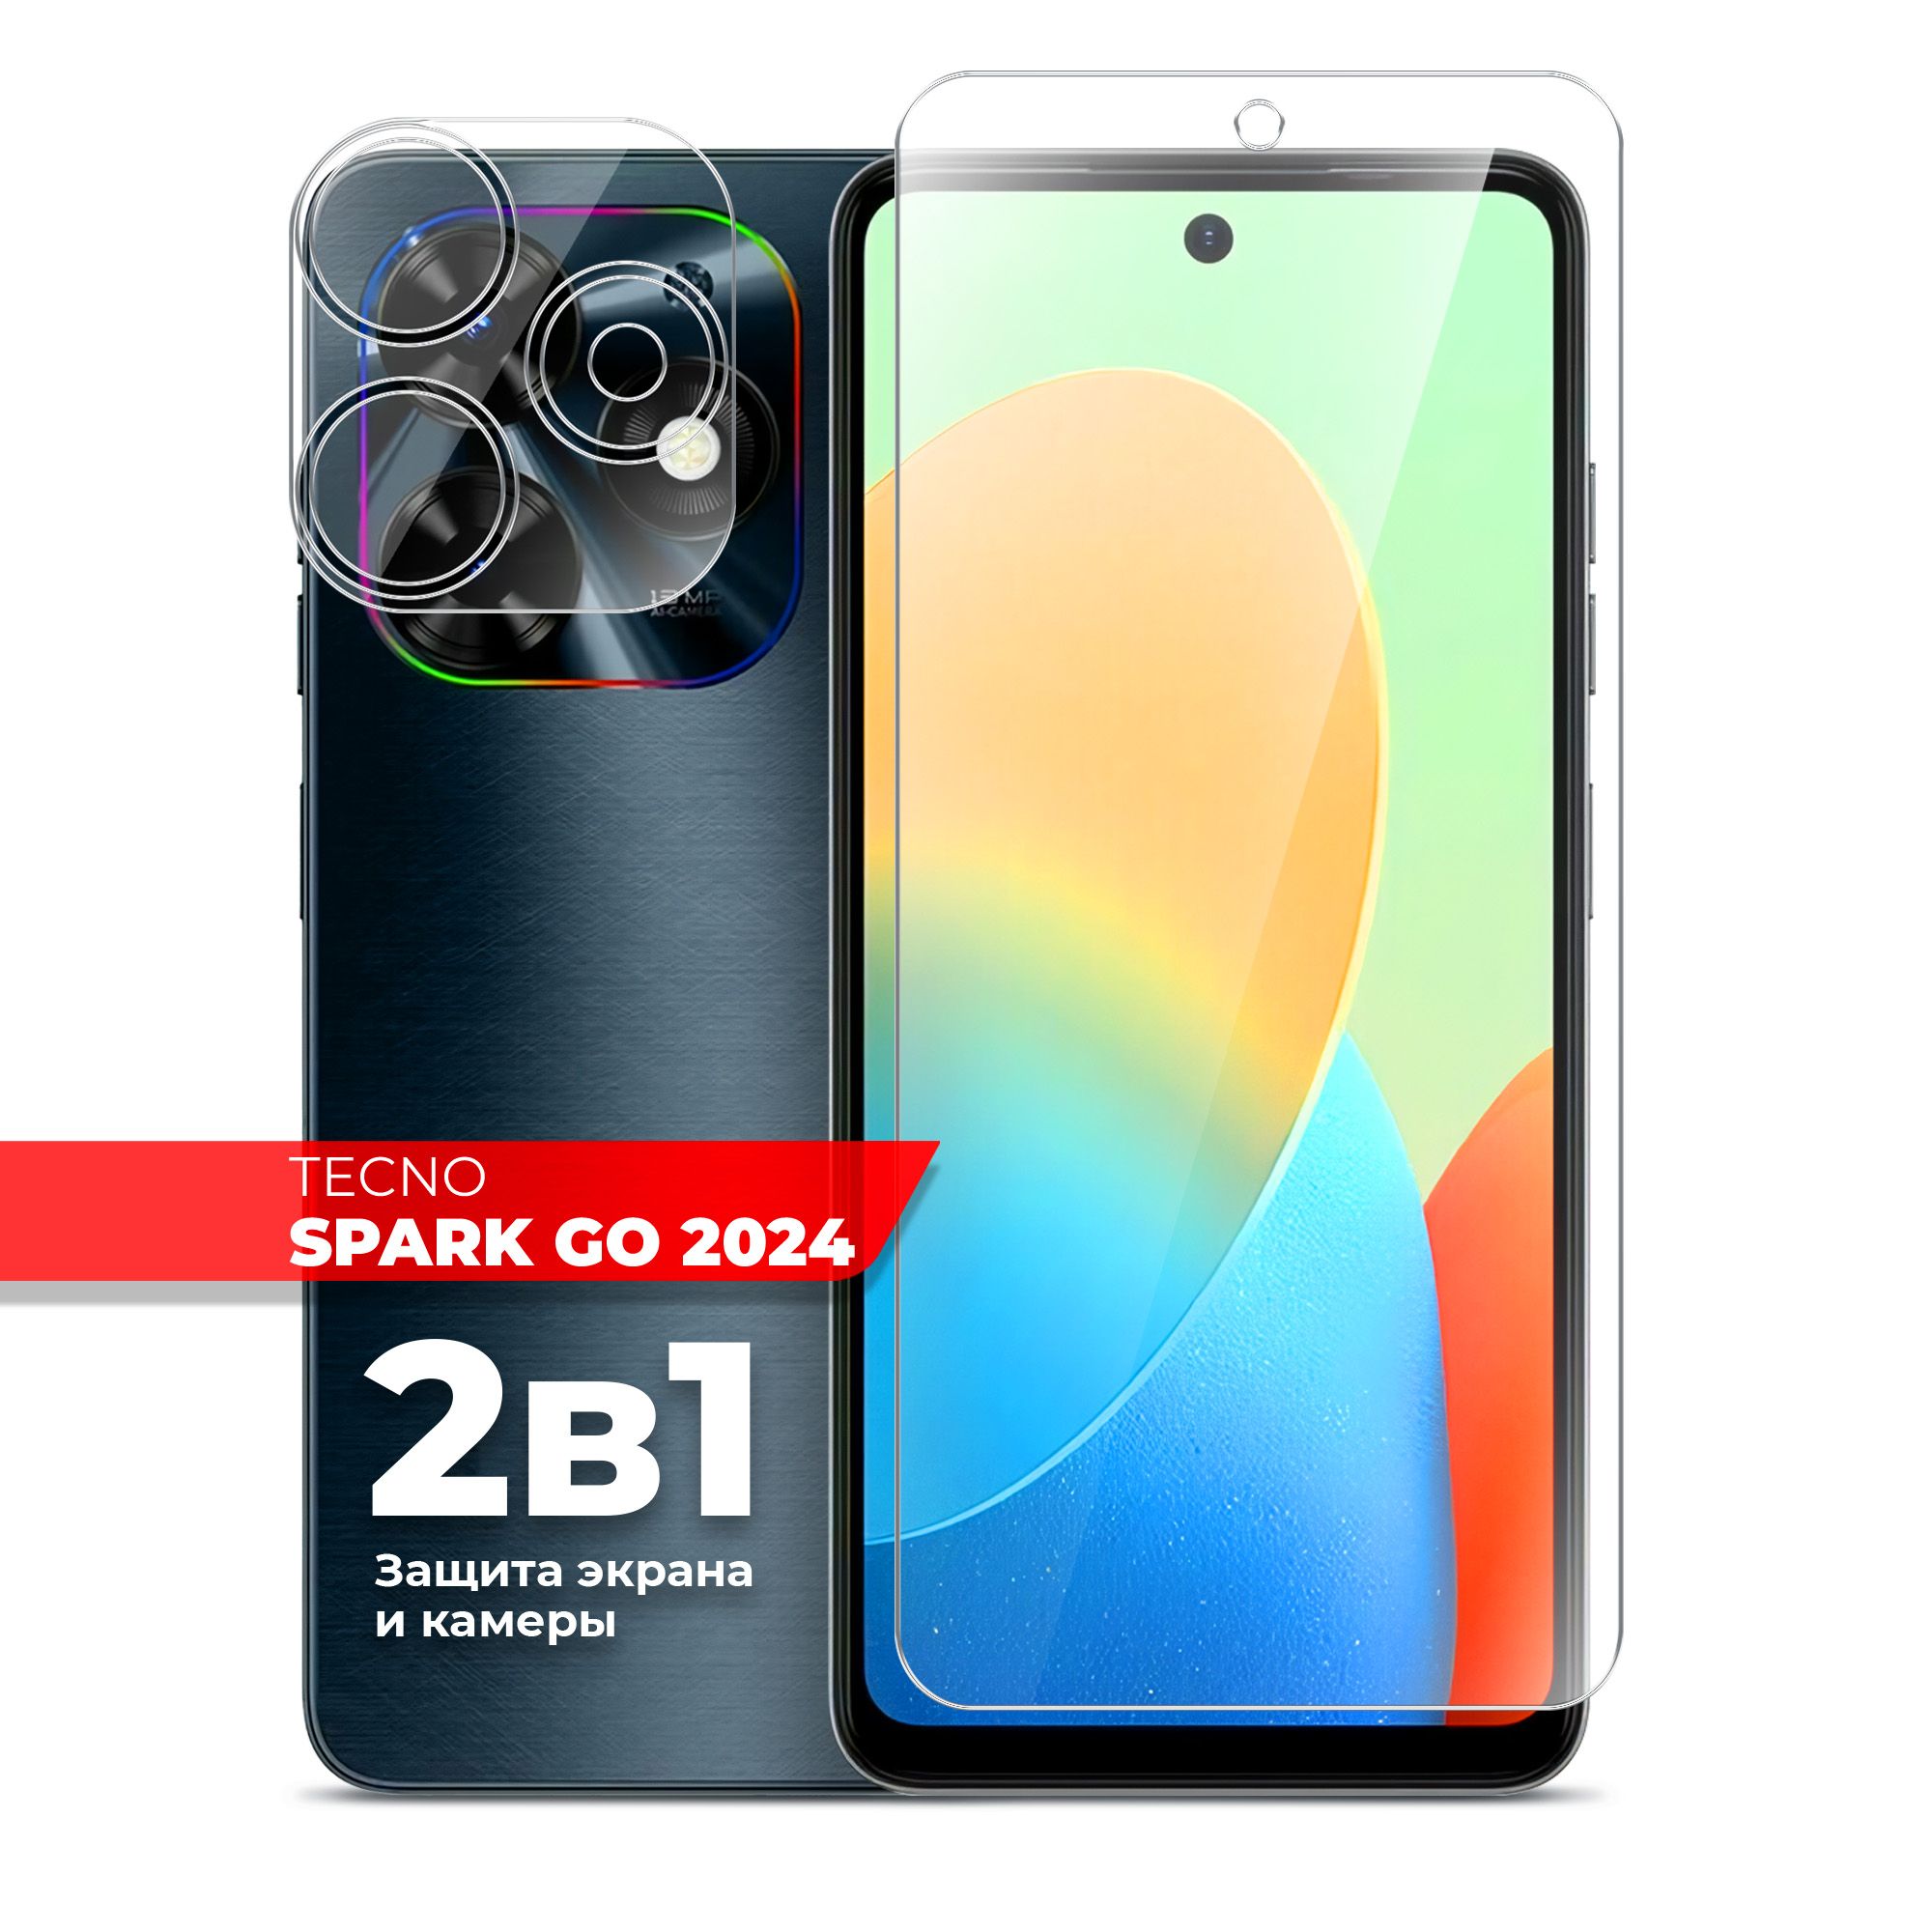 Techno Spark go 2024 4/128gb. Go Spark Tecno 2024 64 ГБ. Техно Спарк гоу 2024 ценат2024. Техно 2024 телефон.